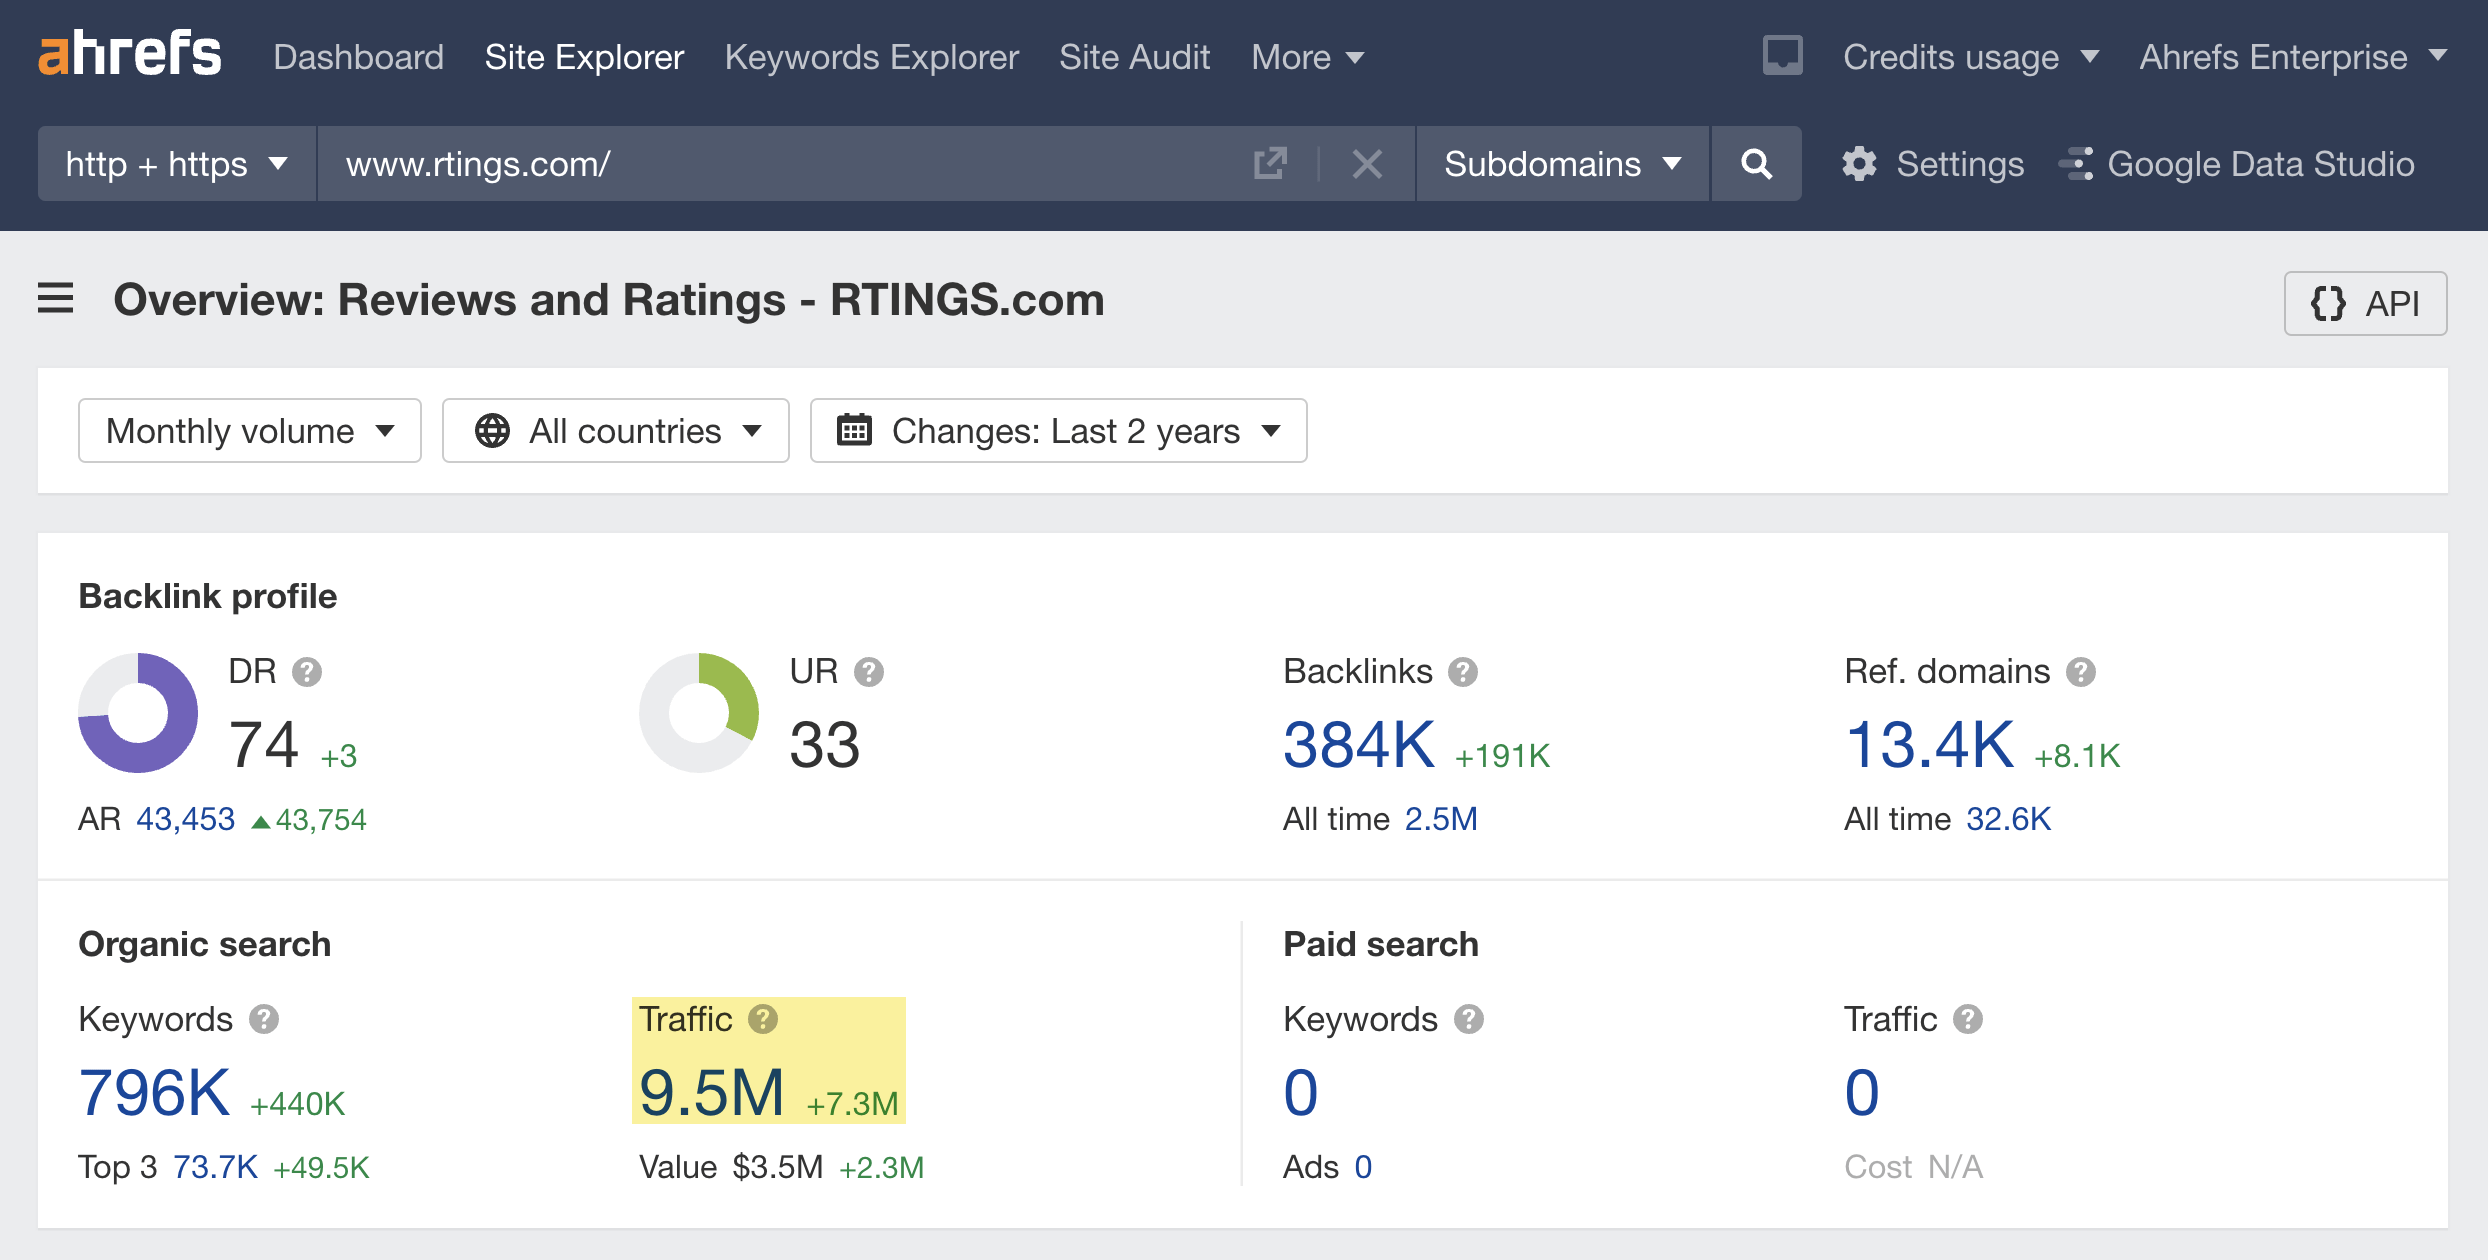 SEO metrics for RTINGS.com from Ahrefs' Site Explorer